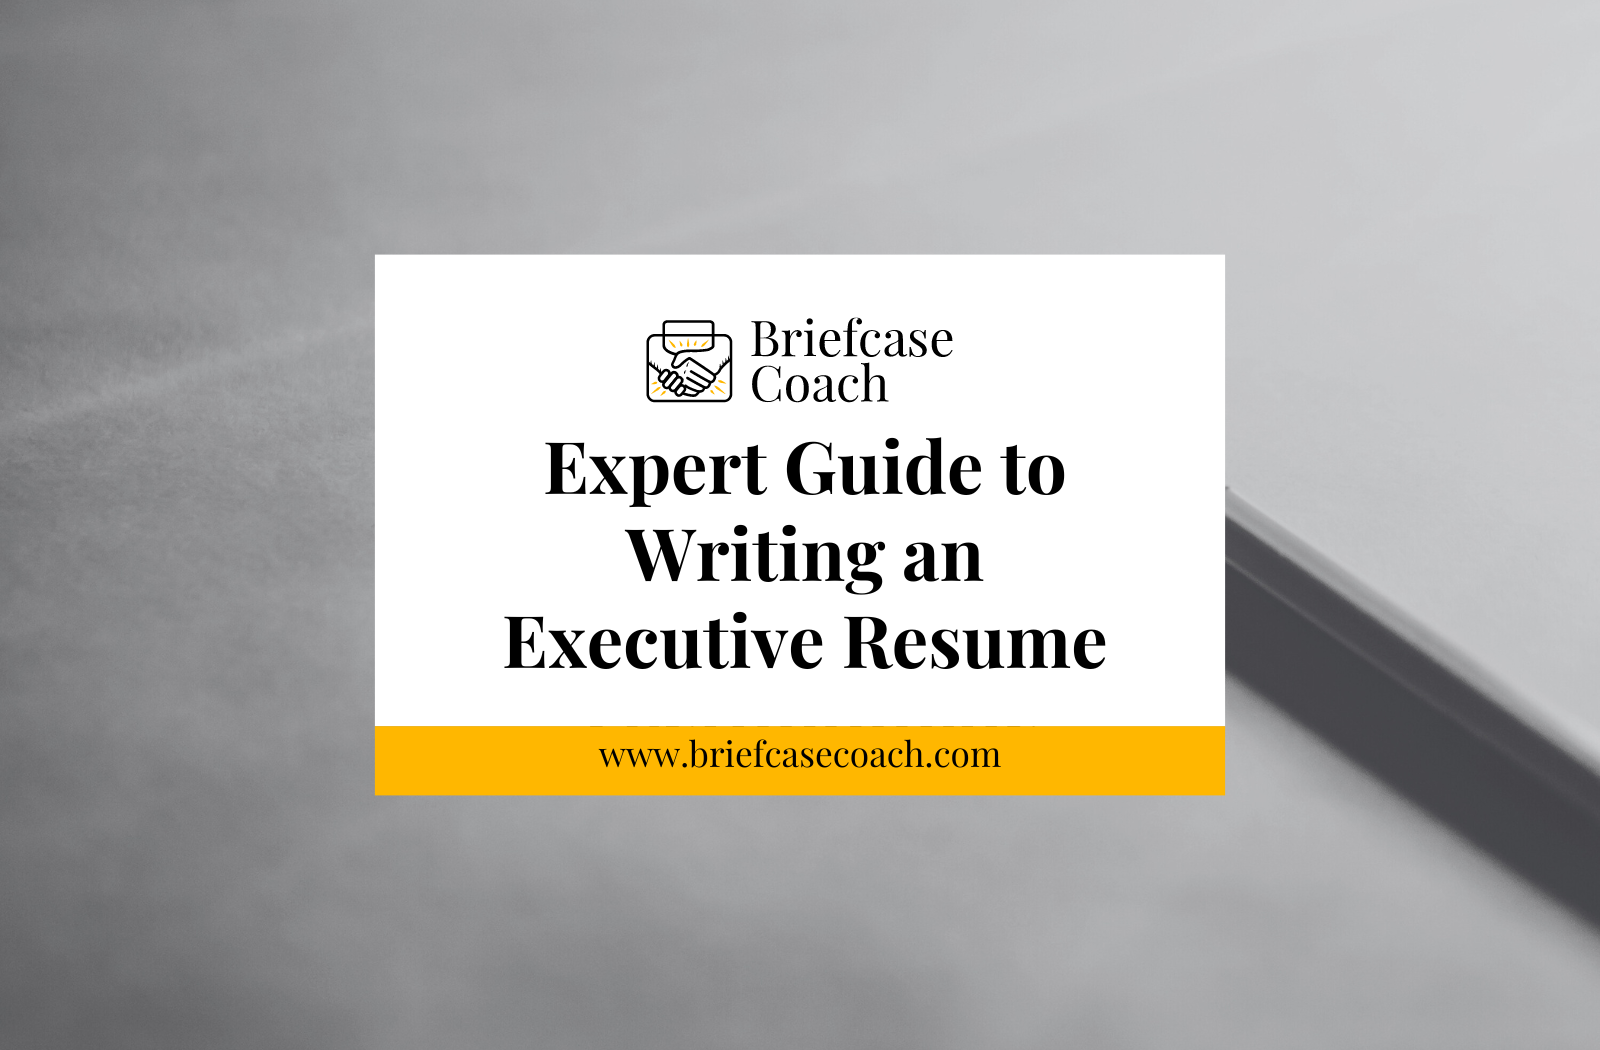 Writing an Executive Resume: An Expert Guide